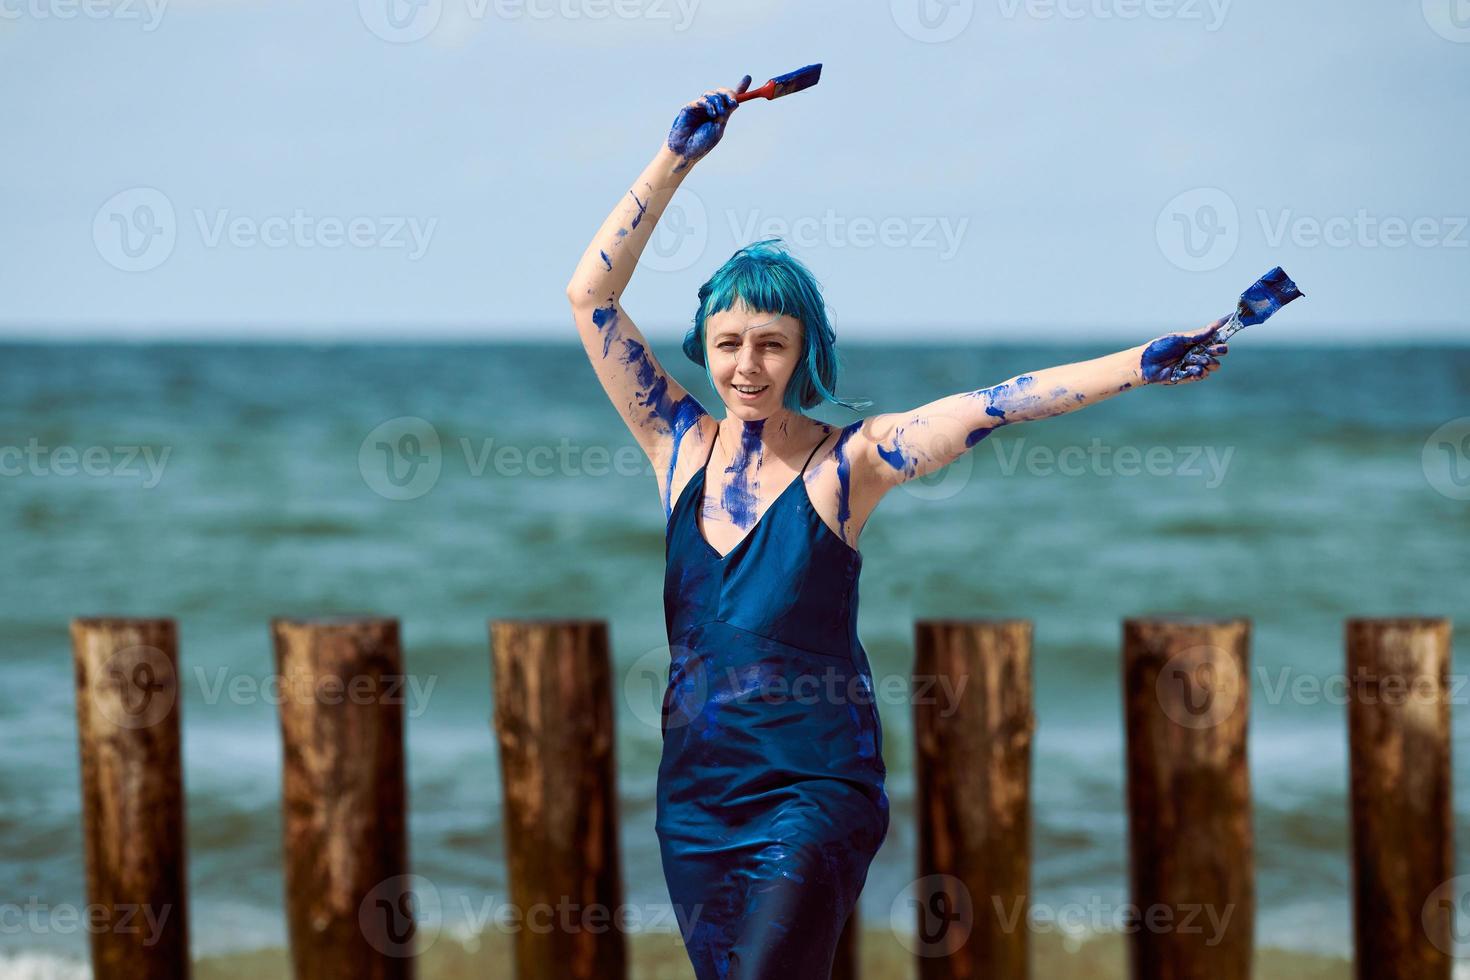 Artista de performance de mujer de cabello azul manchada con pinturas de gouache azul bailando en la playa foto